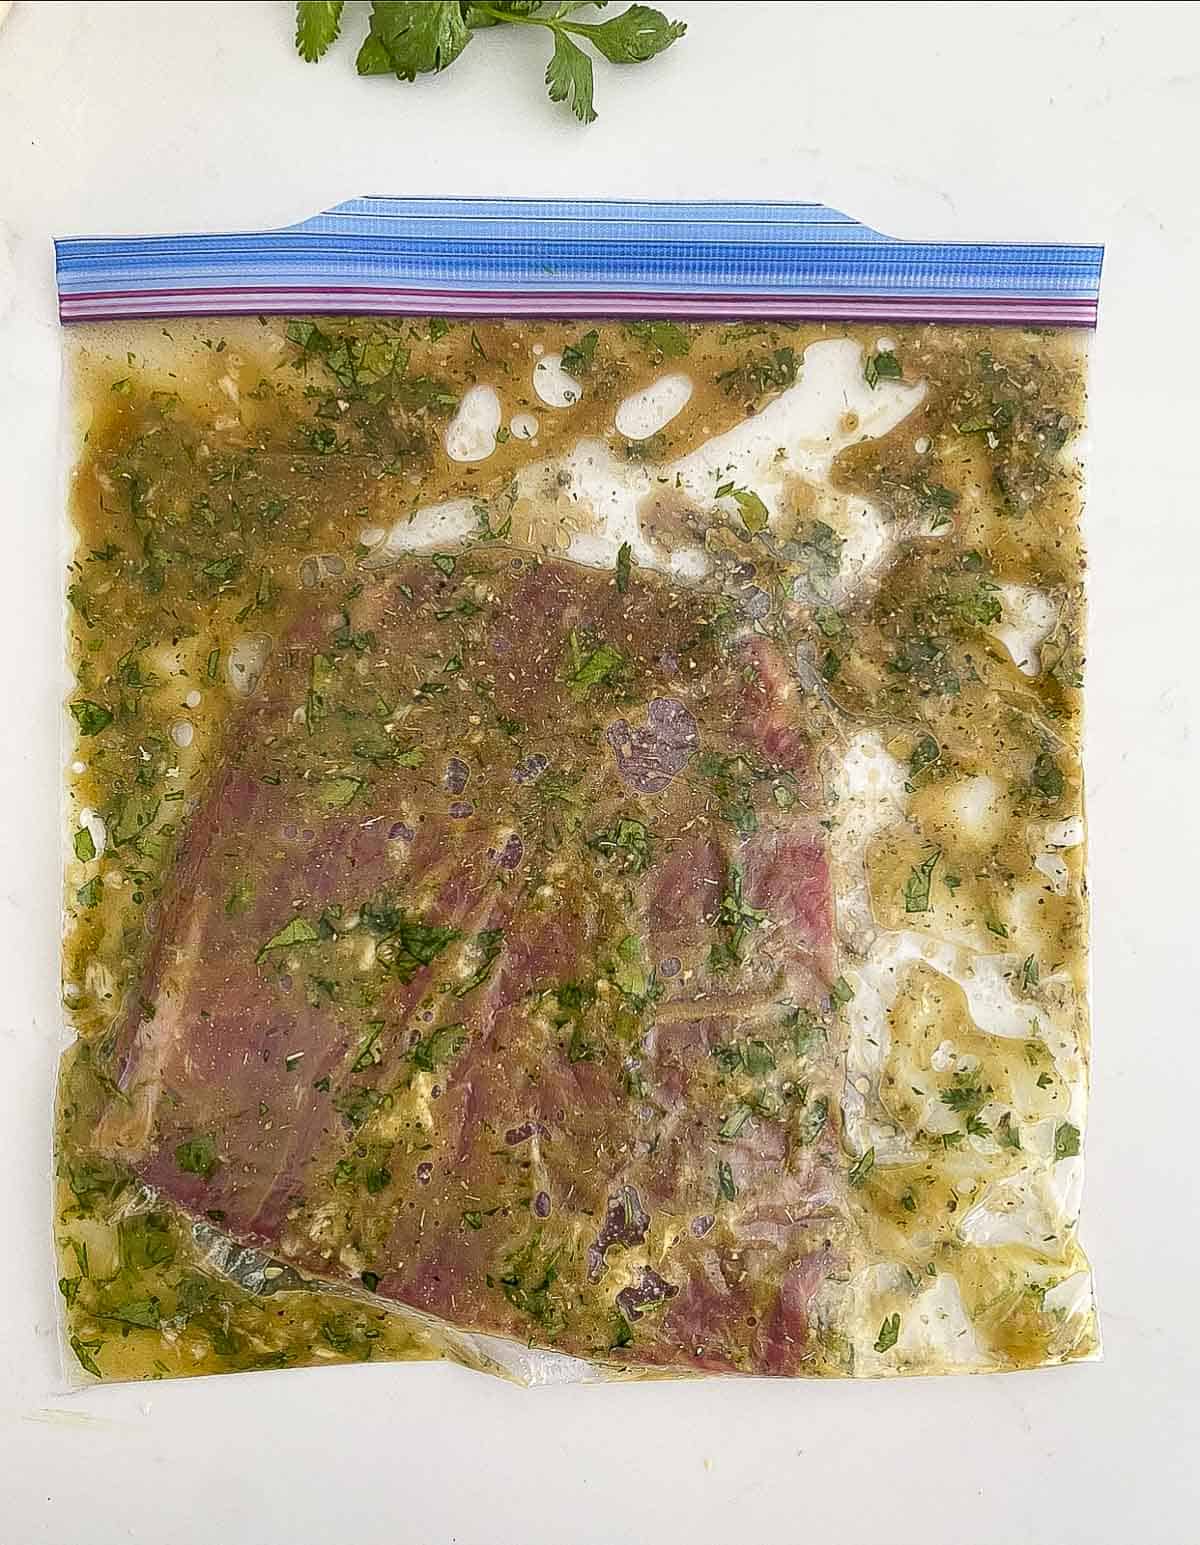 Flank steak with carne asada marinade in a plastic bag.